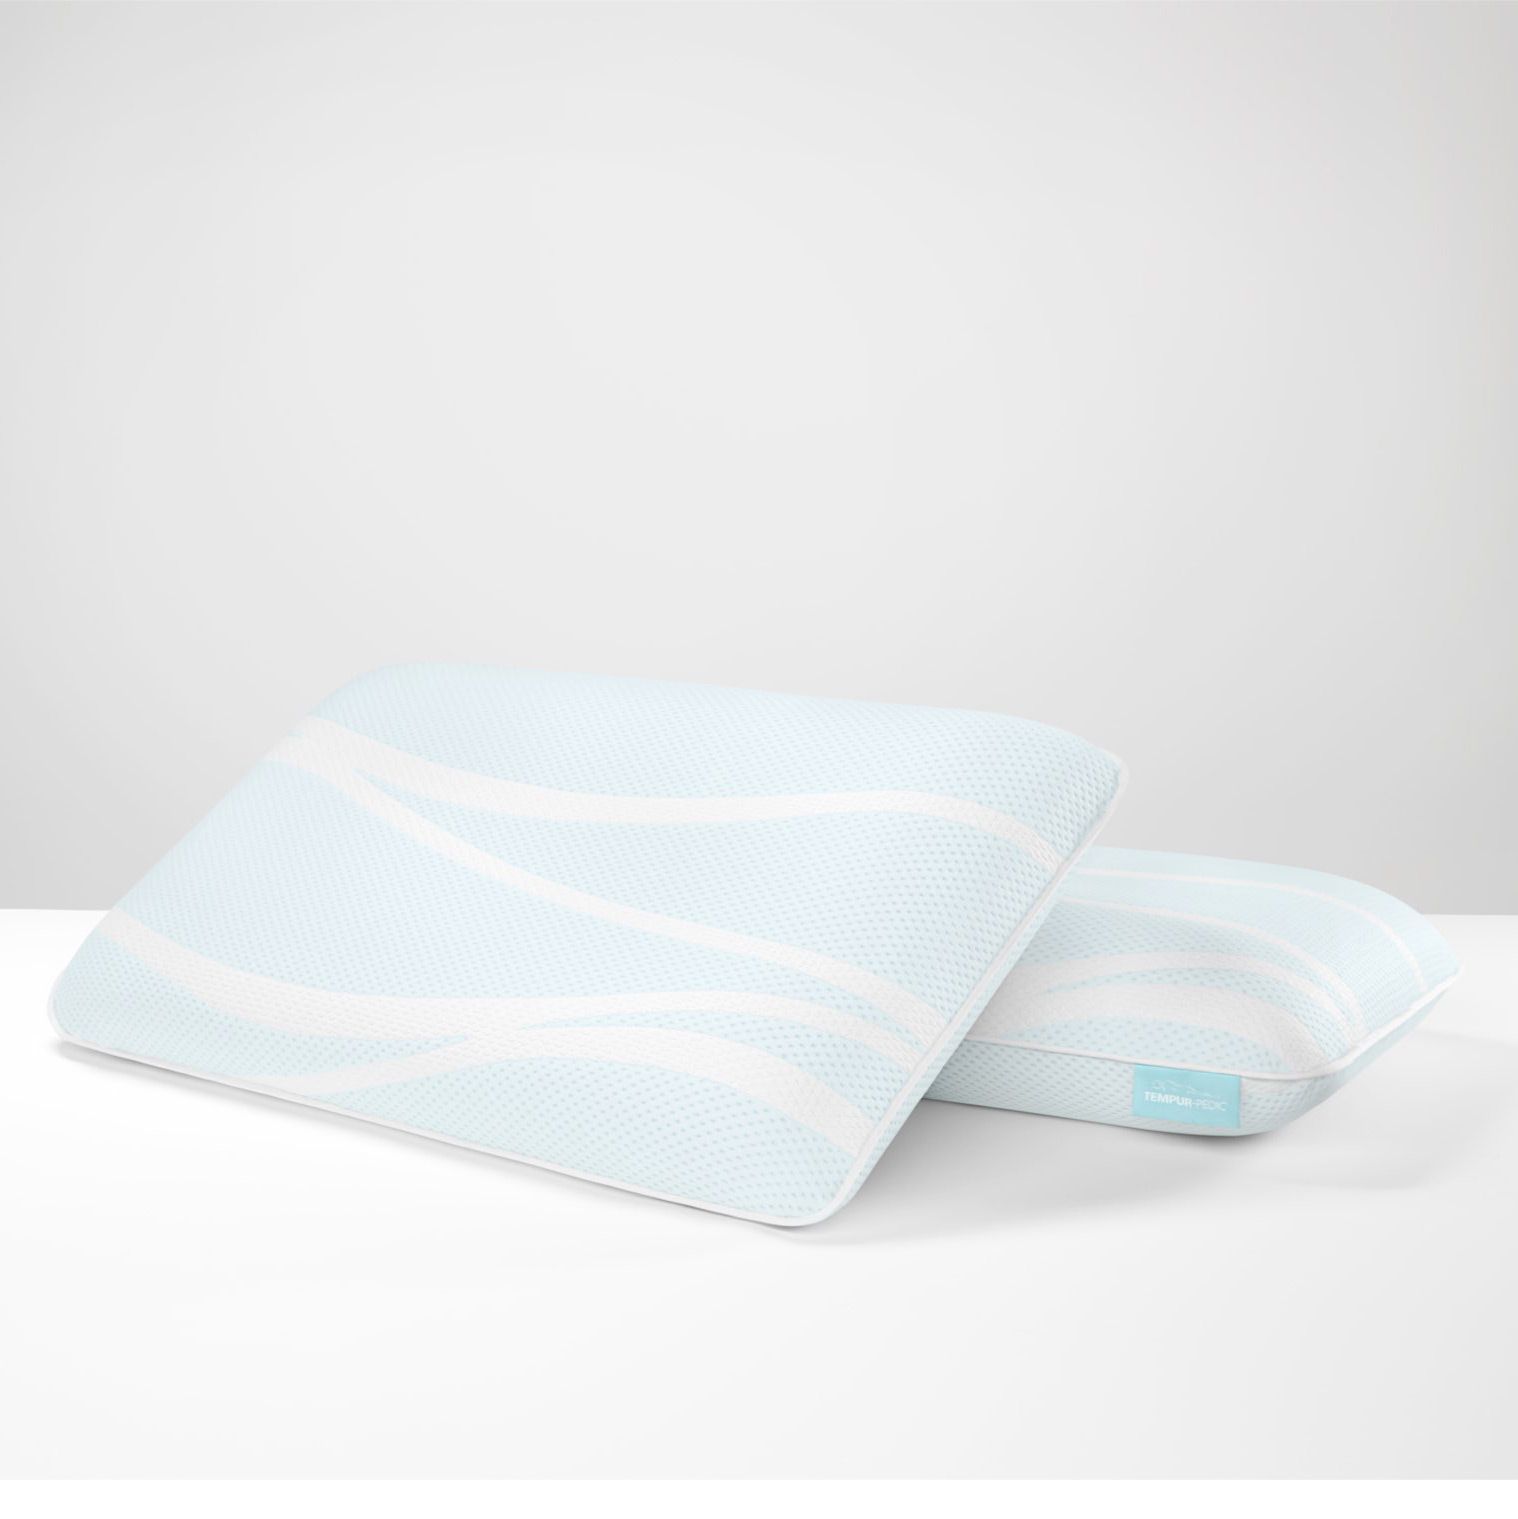 breeze Pro + Advanced Cooling Pillow